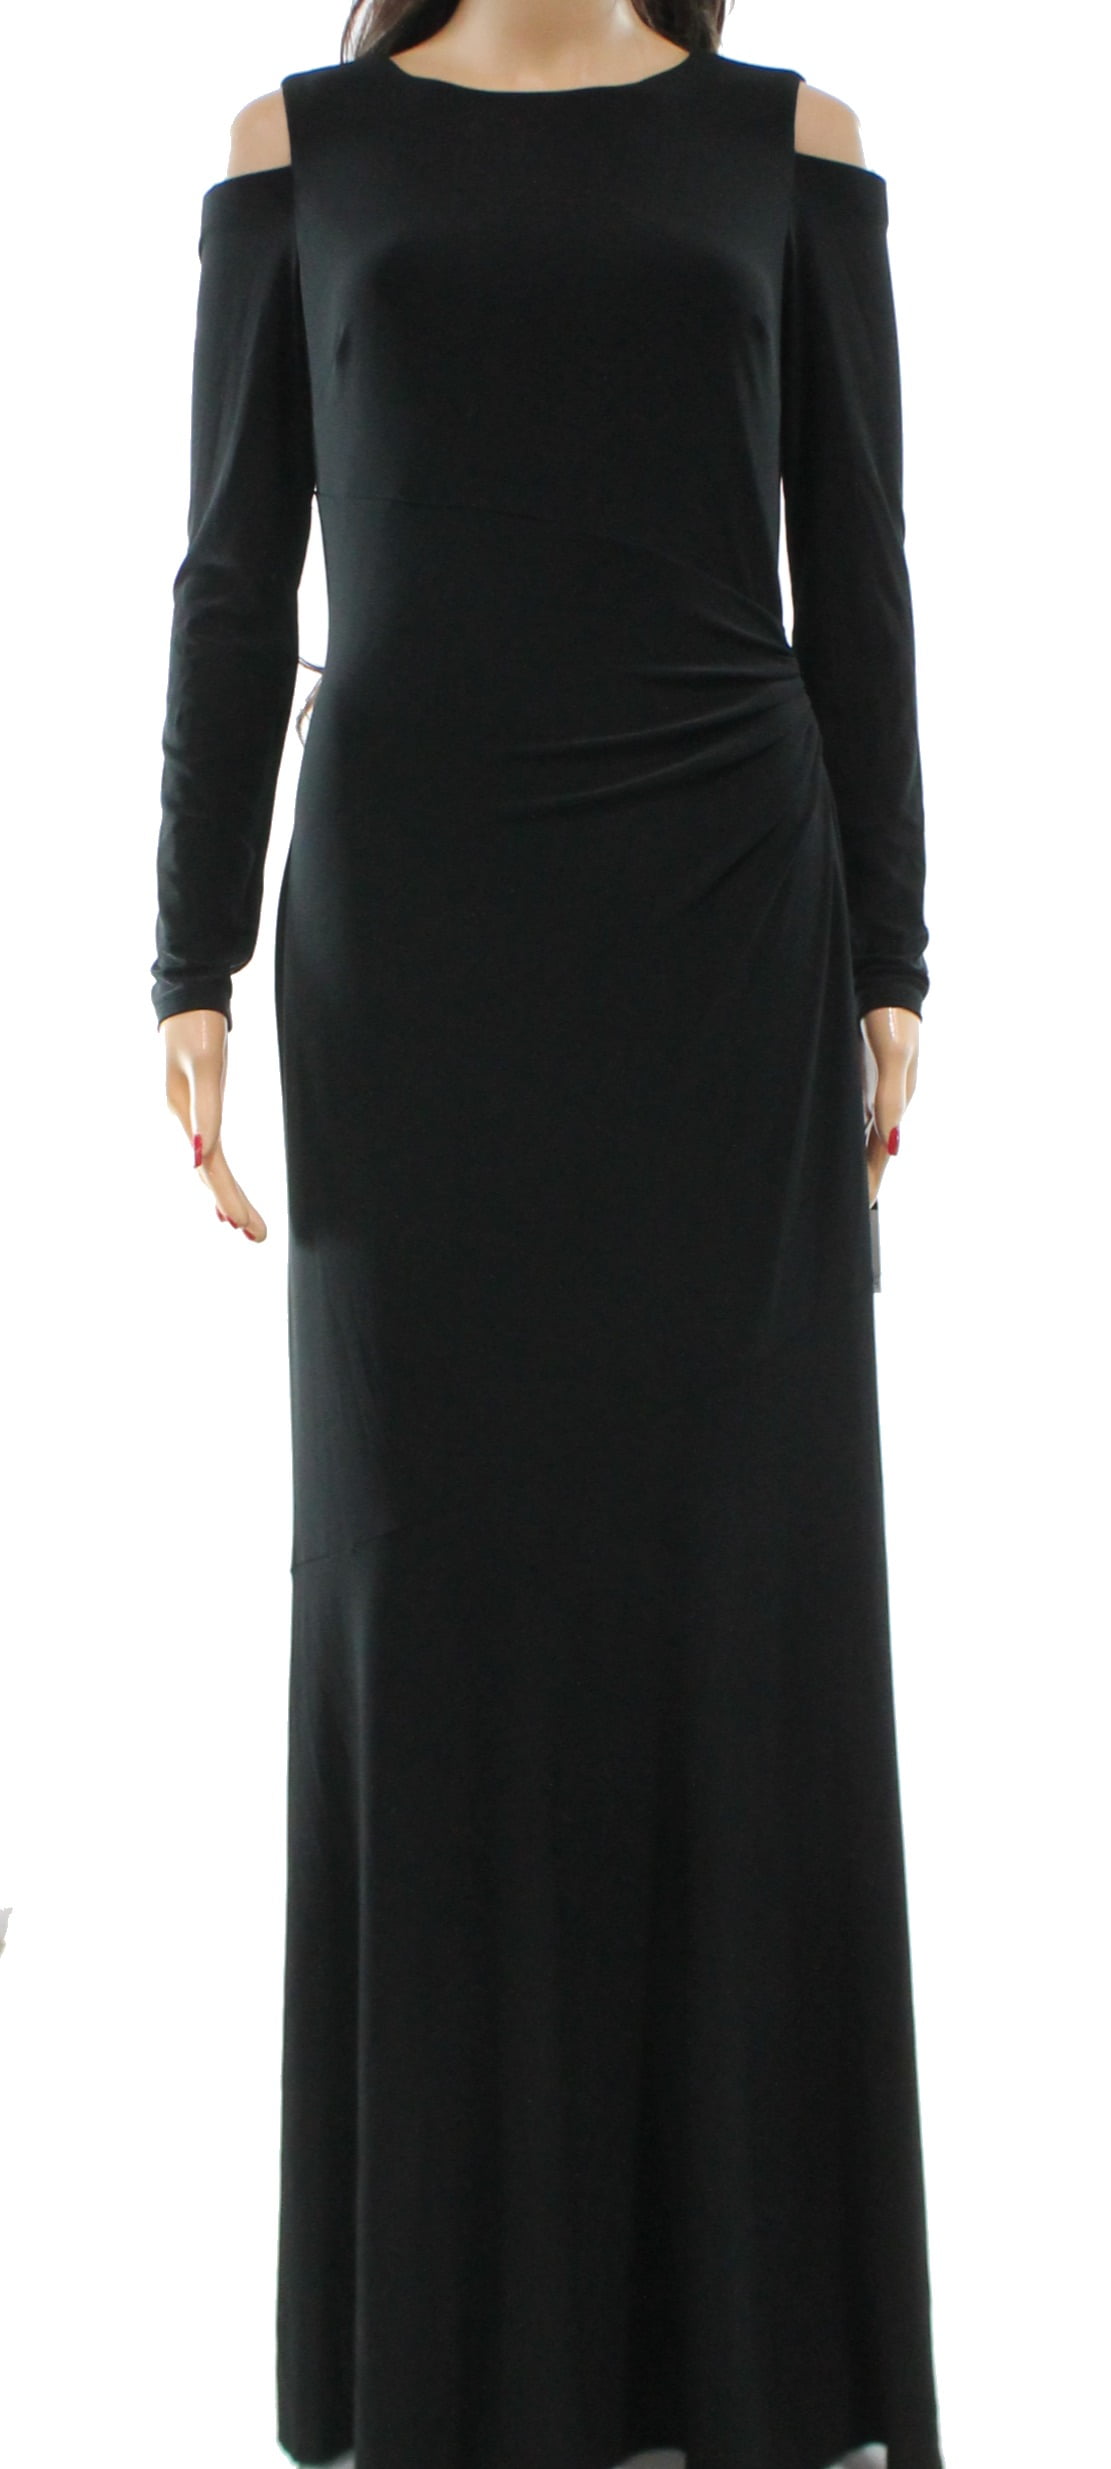 black maxi dress size 18